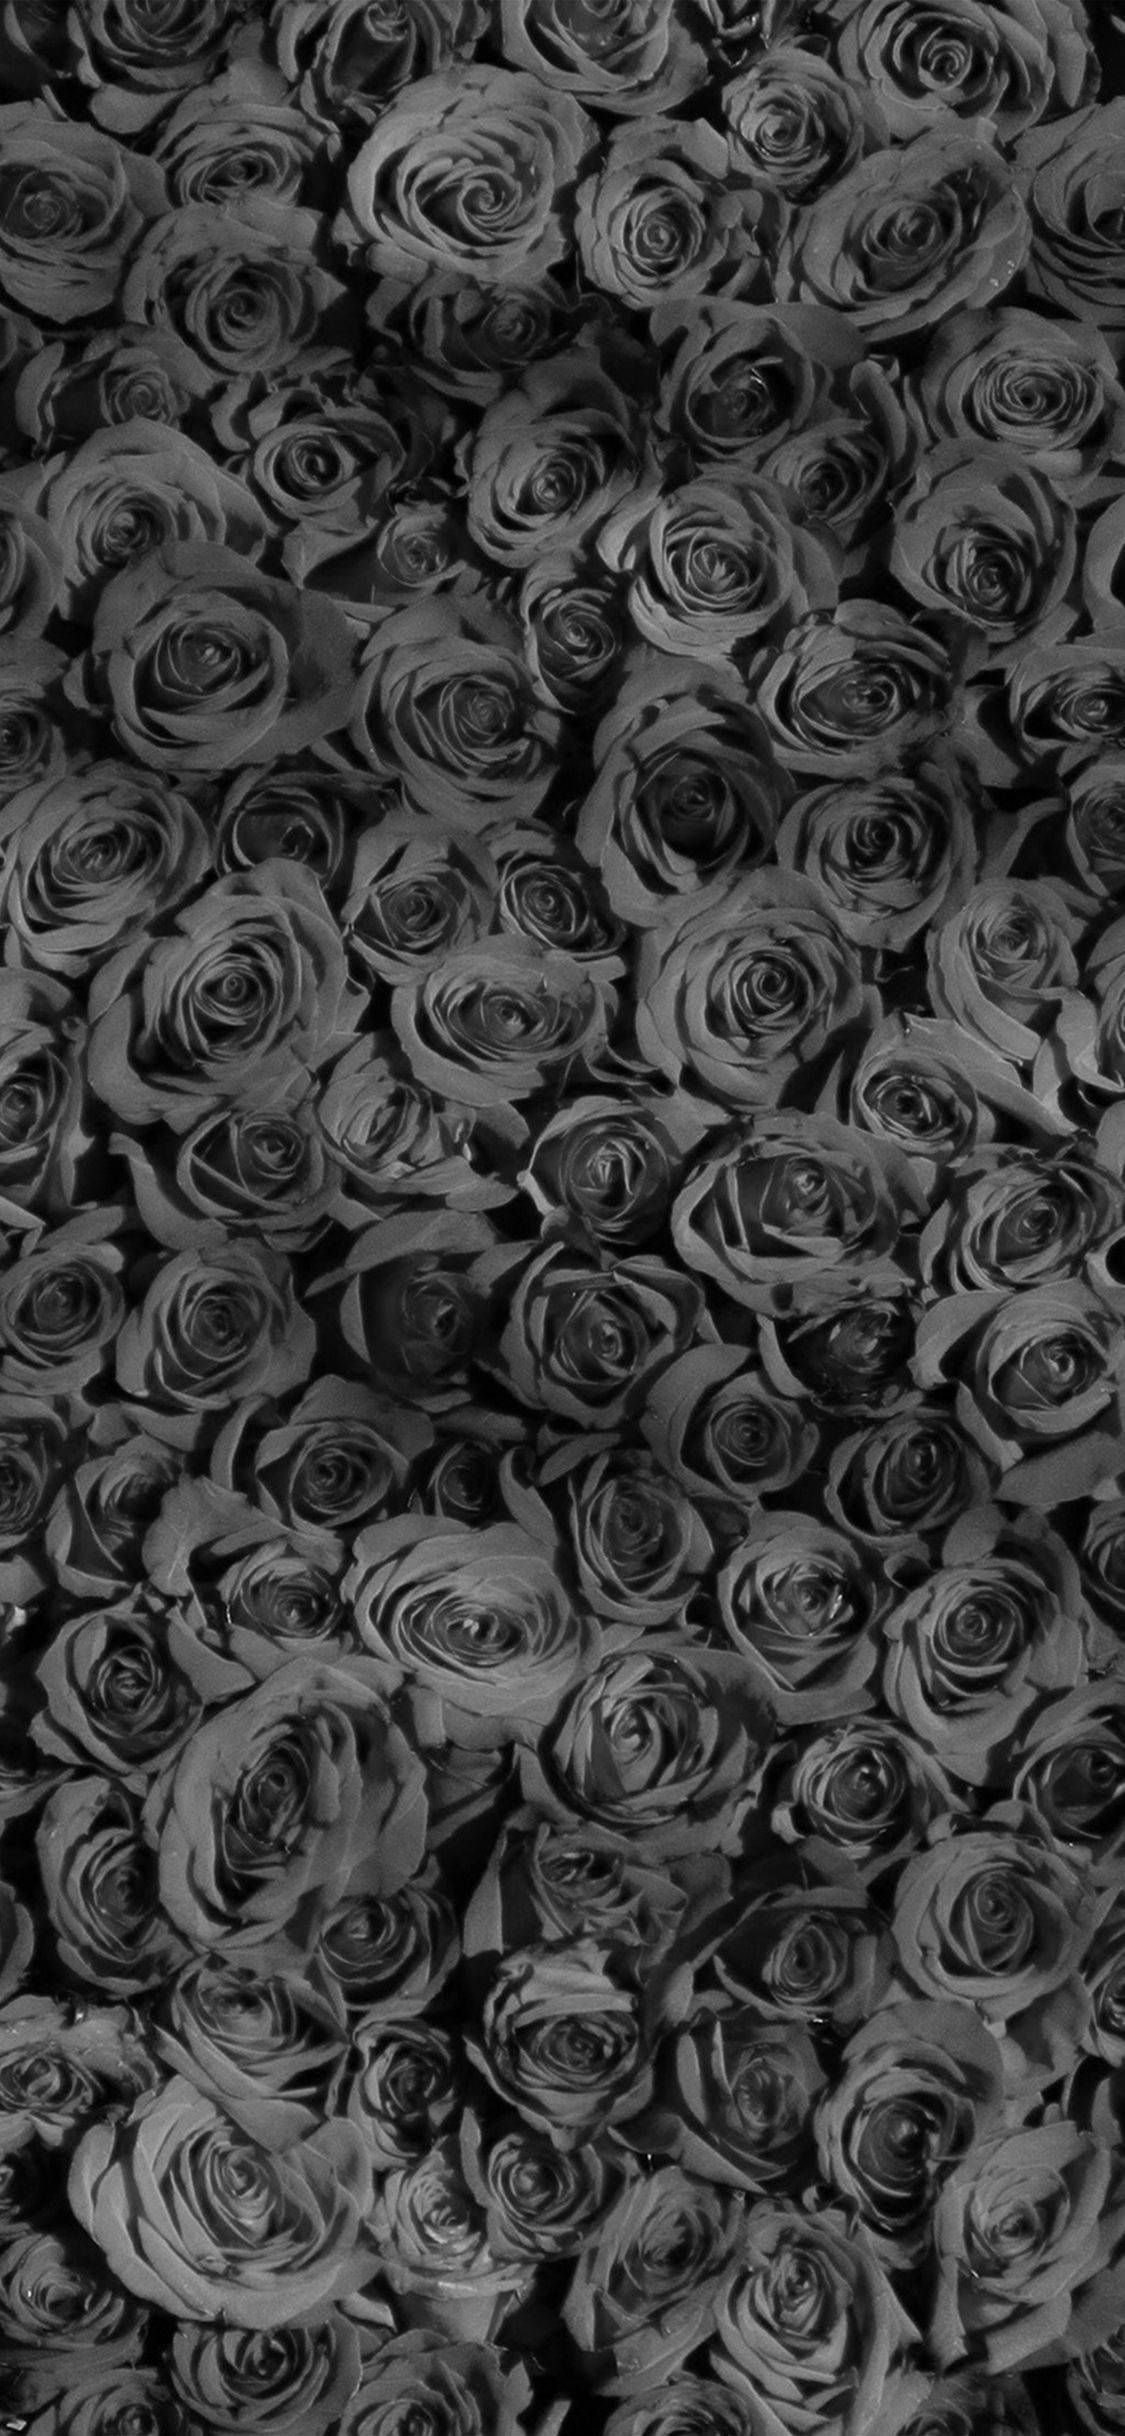 Stunning Wall Of Black Rose Iphone Wallpaper